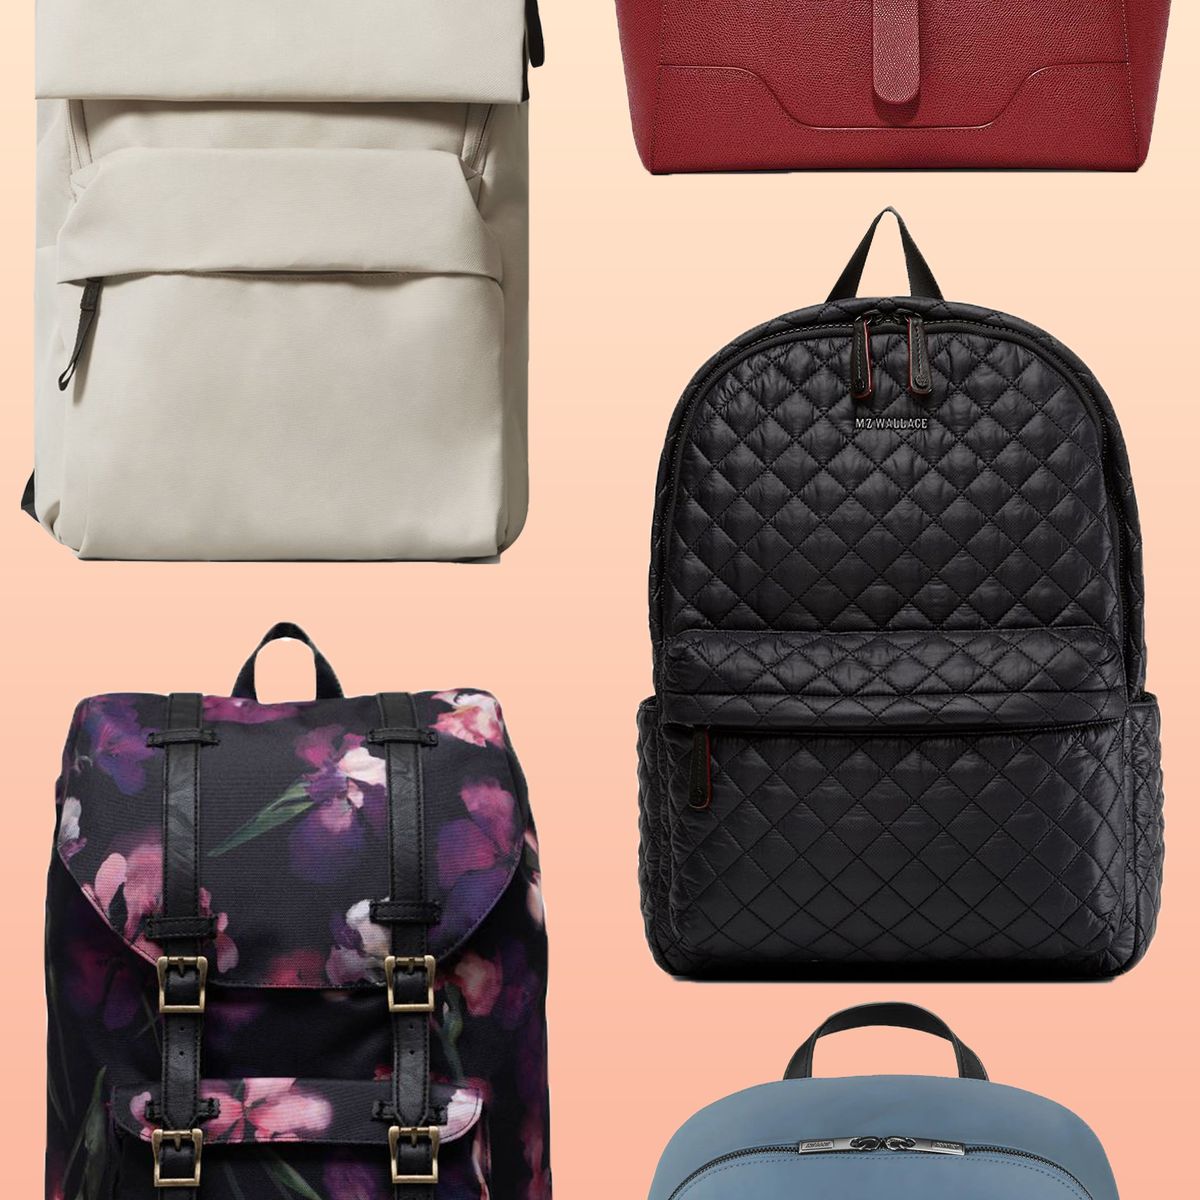 Buy Sammy Backpack Bag Online - Accessorize India